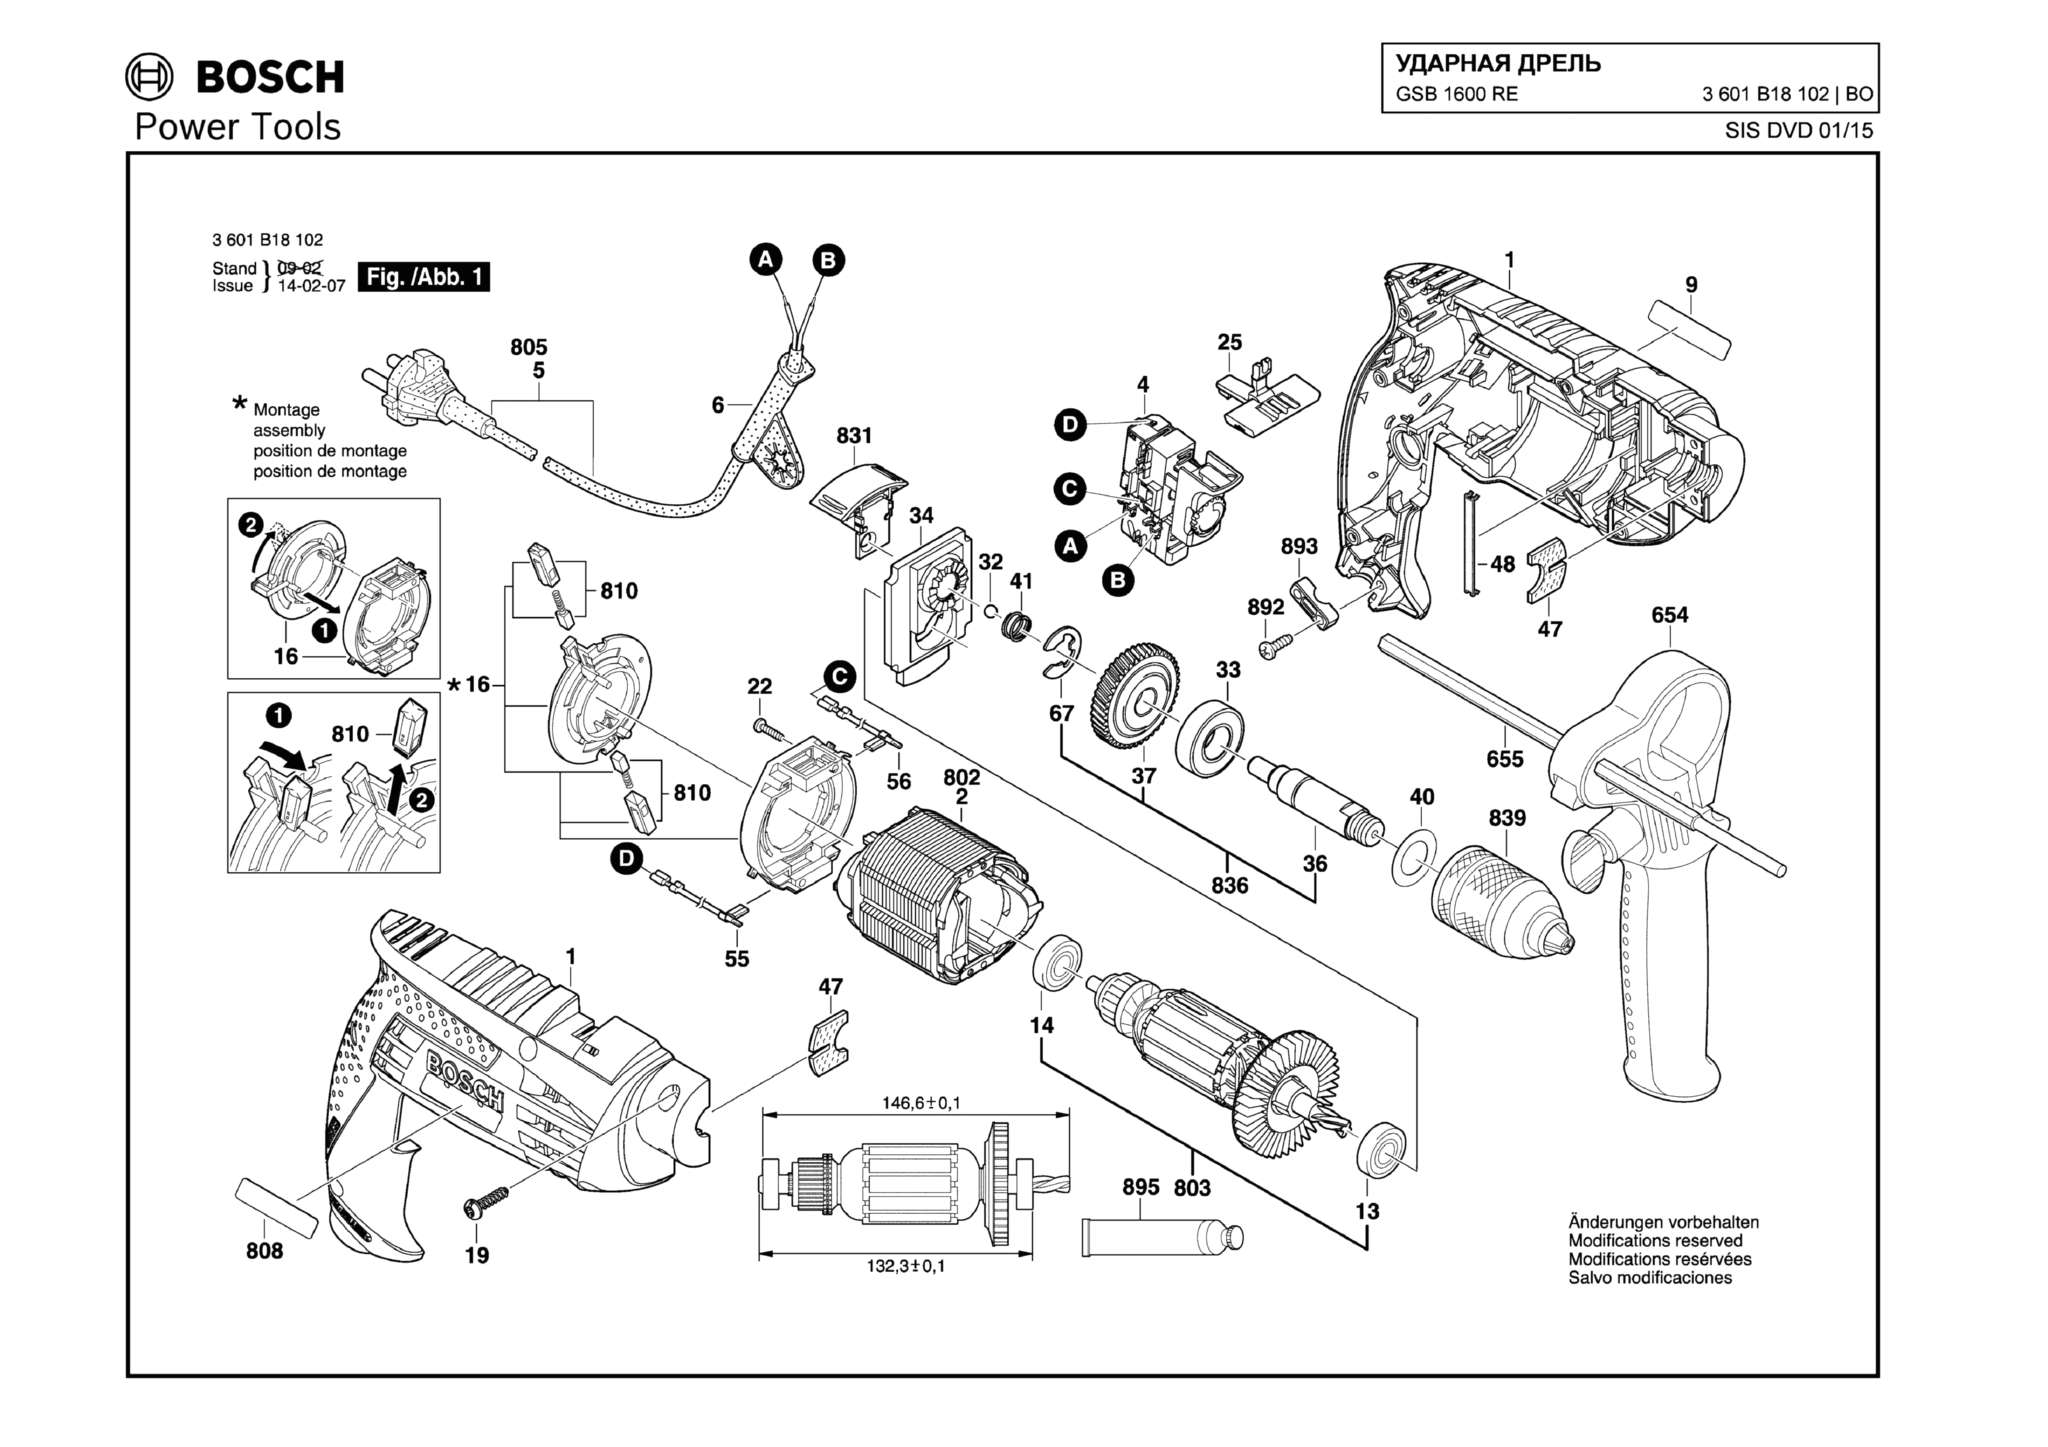 Запчасти, схема и деталировка Bosch GSB 1600 RE (ТИП 3601B18102)